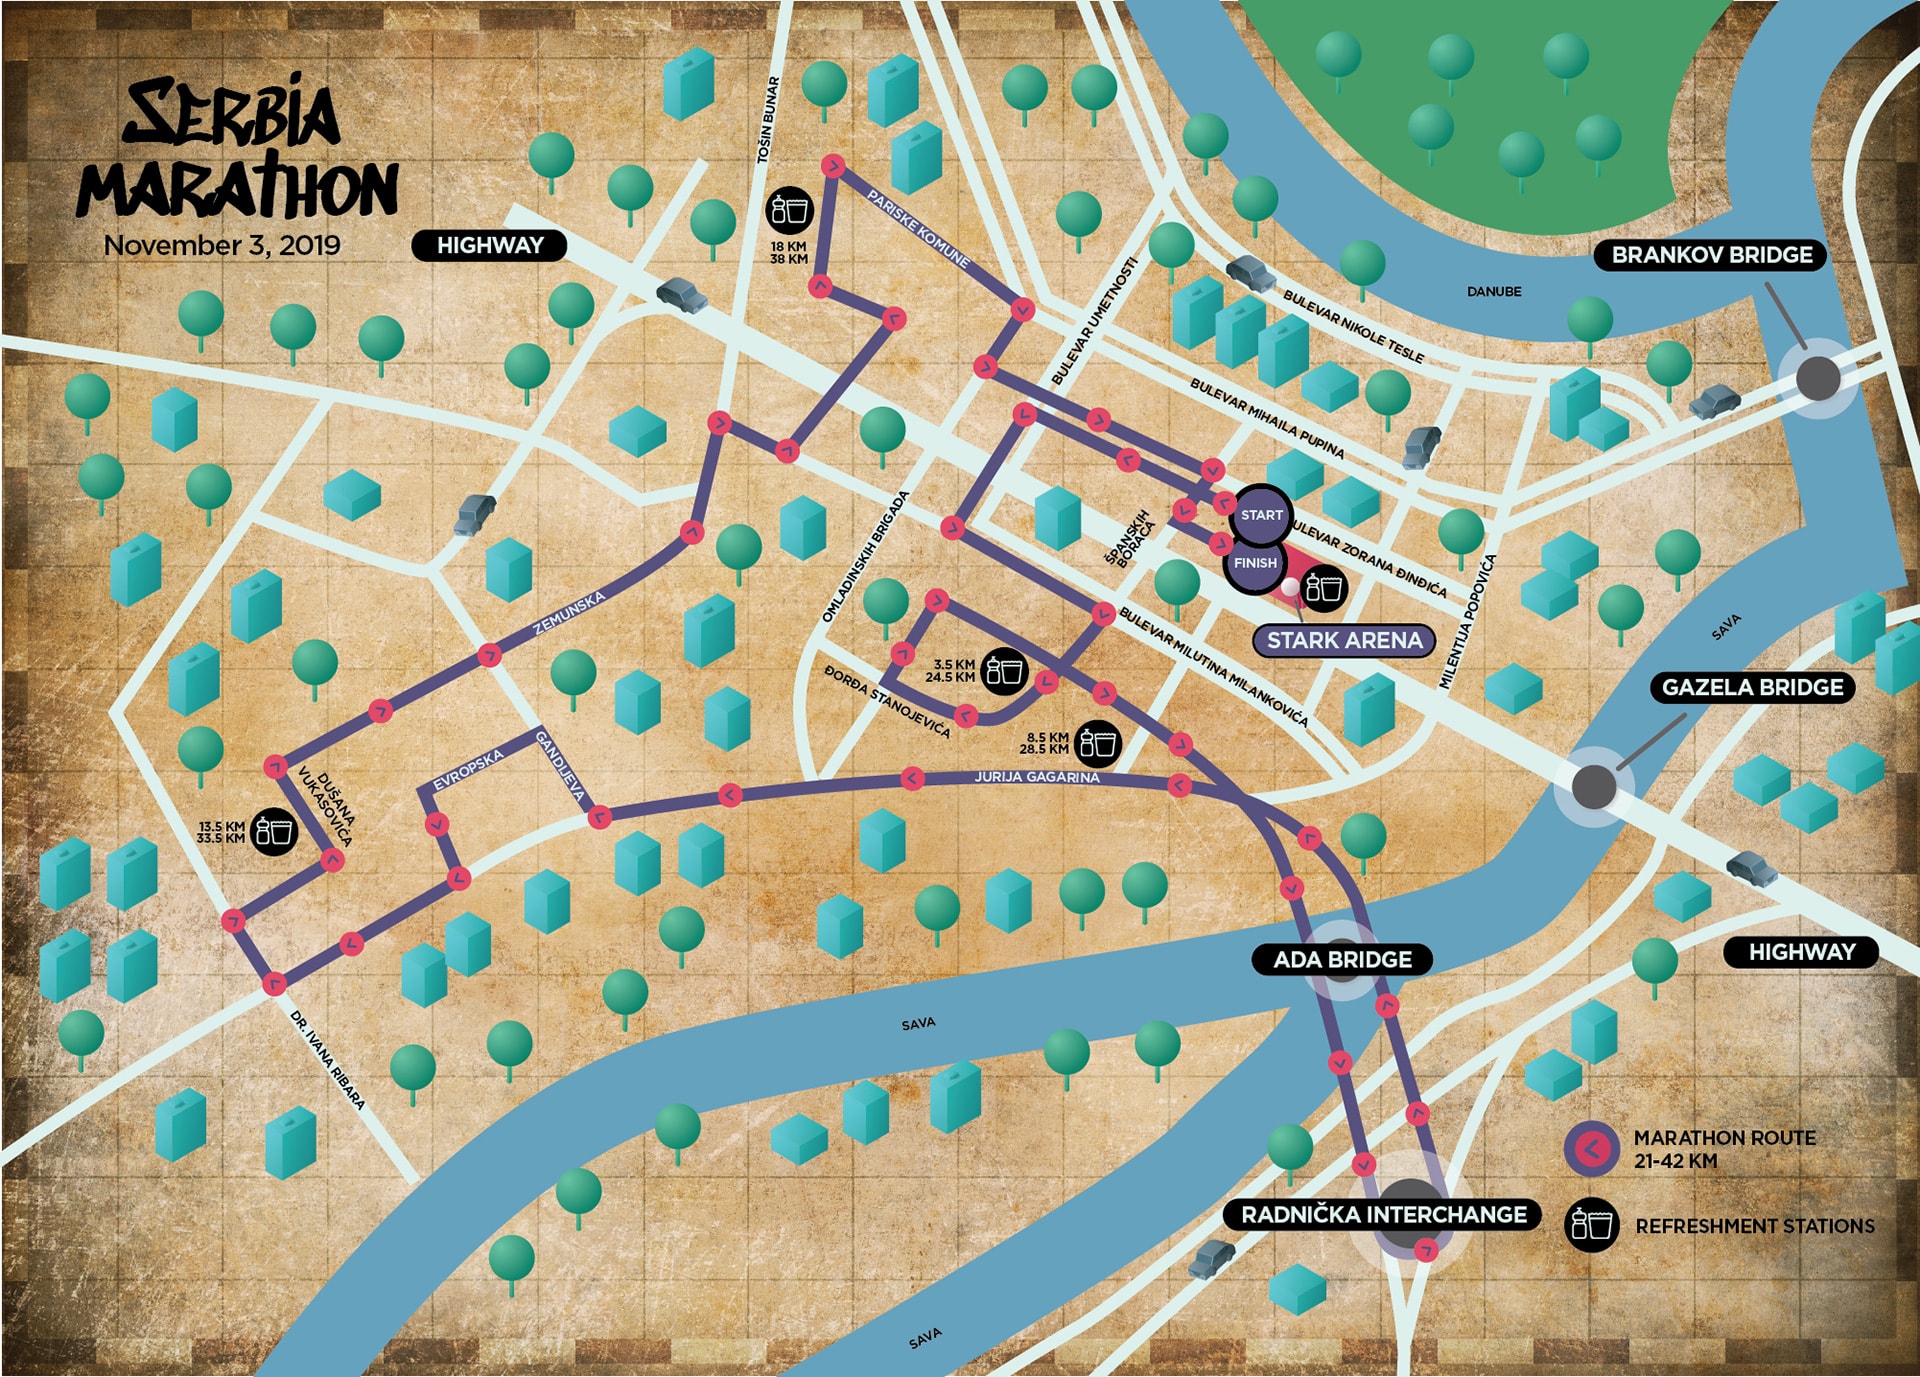 Serbia Marathon mapa